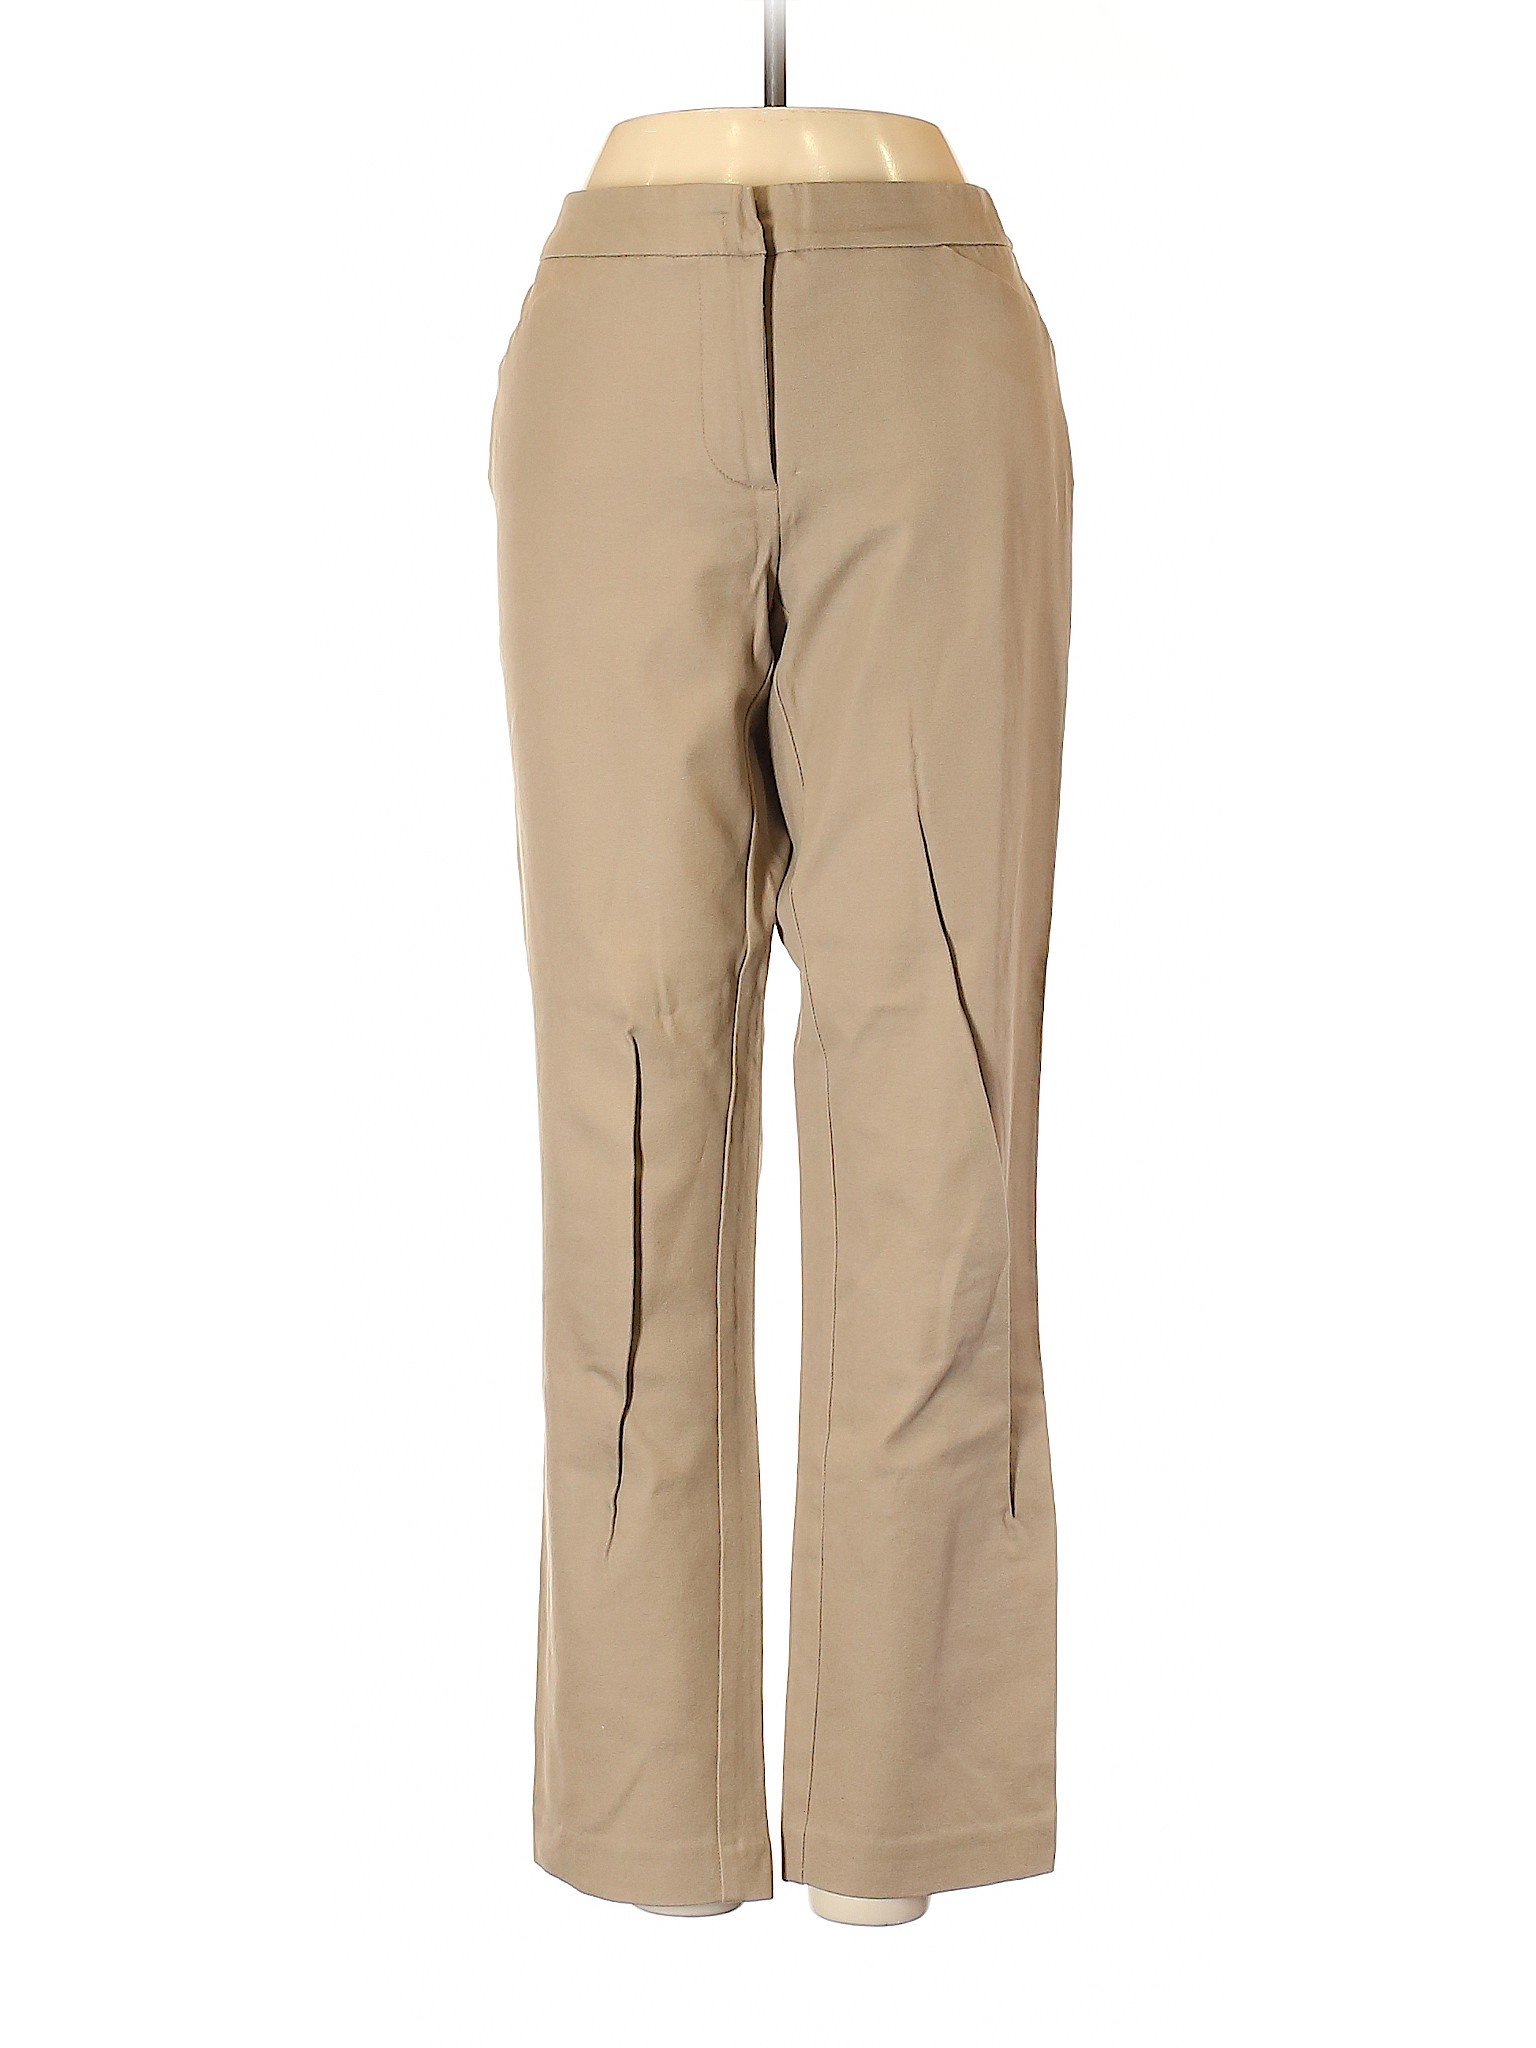 Chico's Women Brown Dress Pants XS | eBay